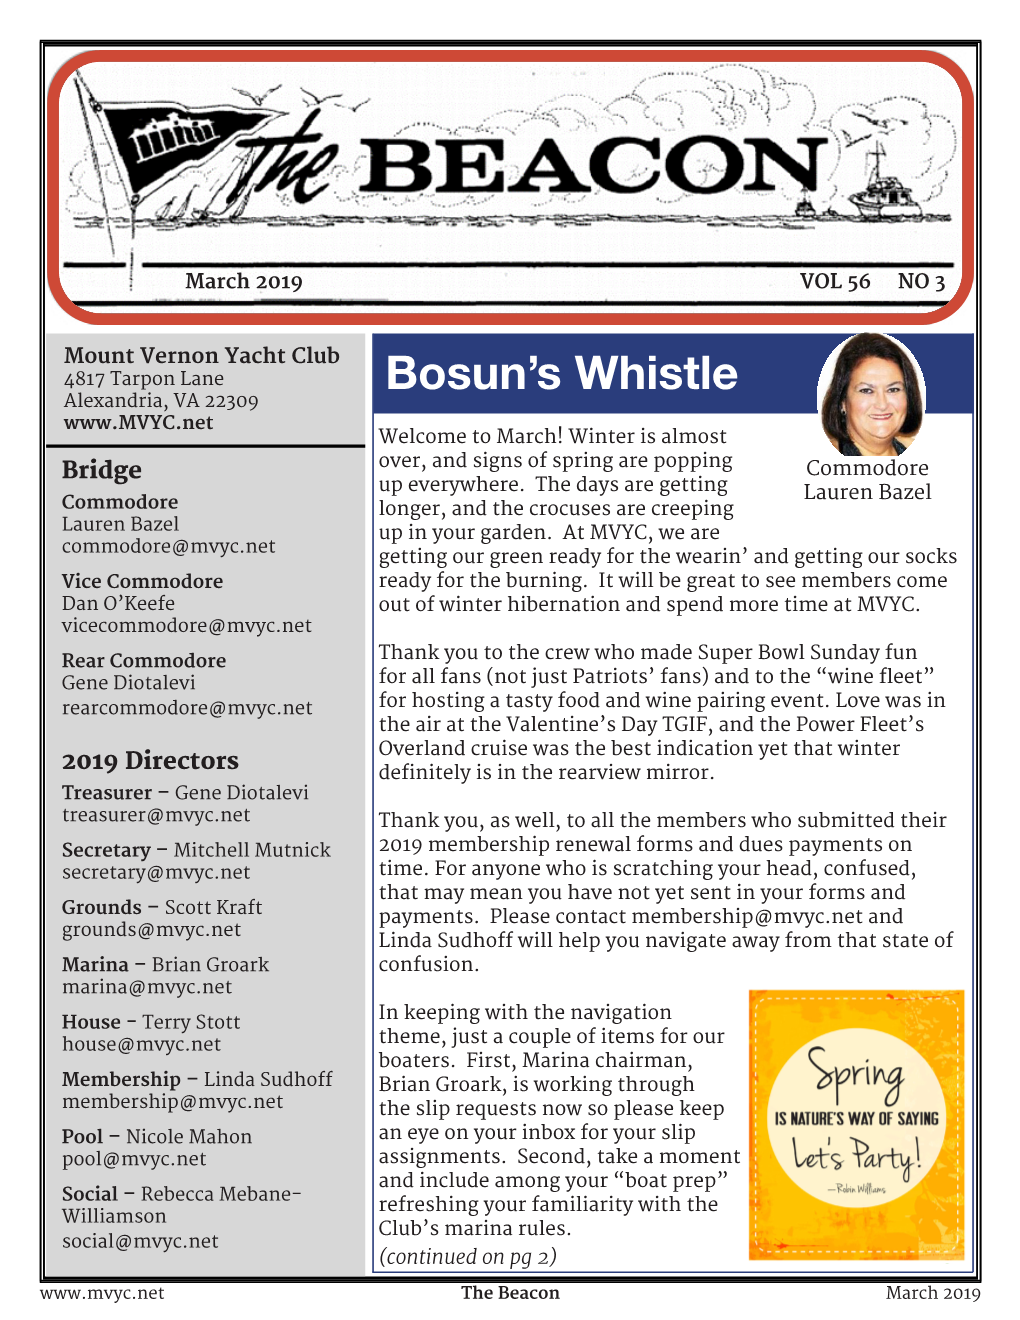 Bosun's Whistle